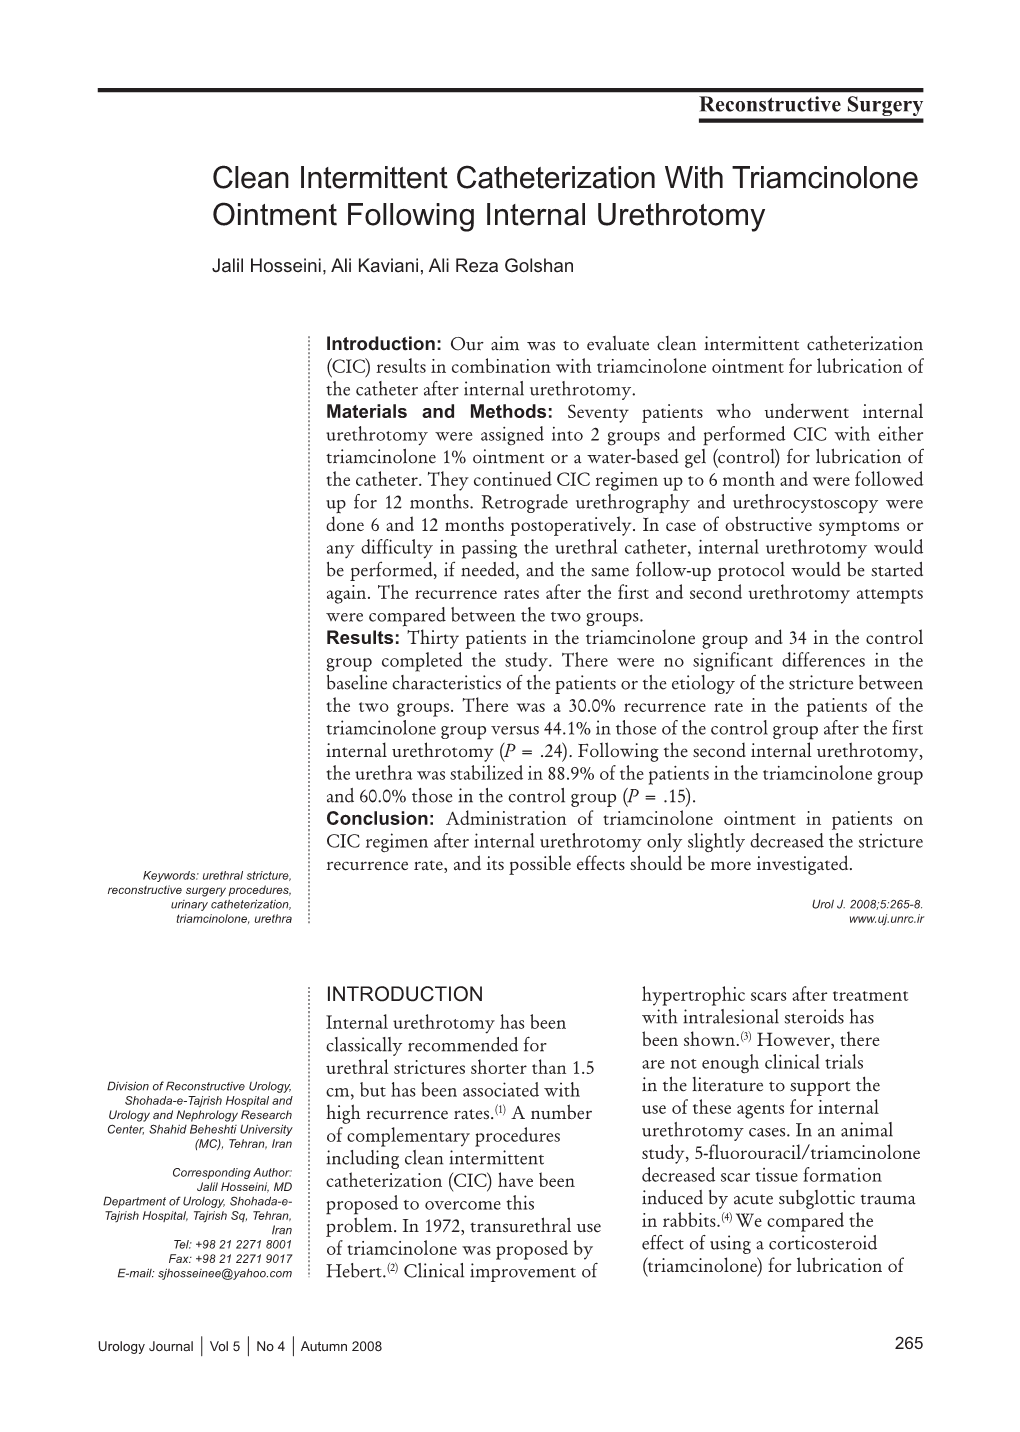 Clean Intermittent Catheterization with Triamcinolone Ointment Following Internal Urethrotomy